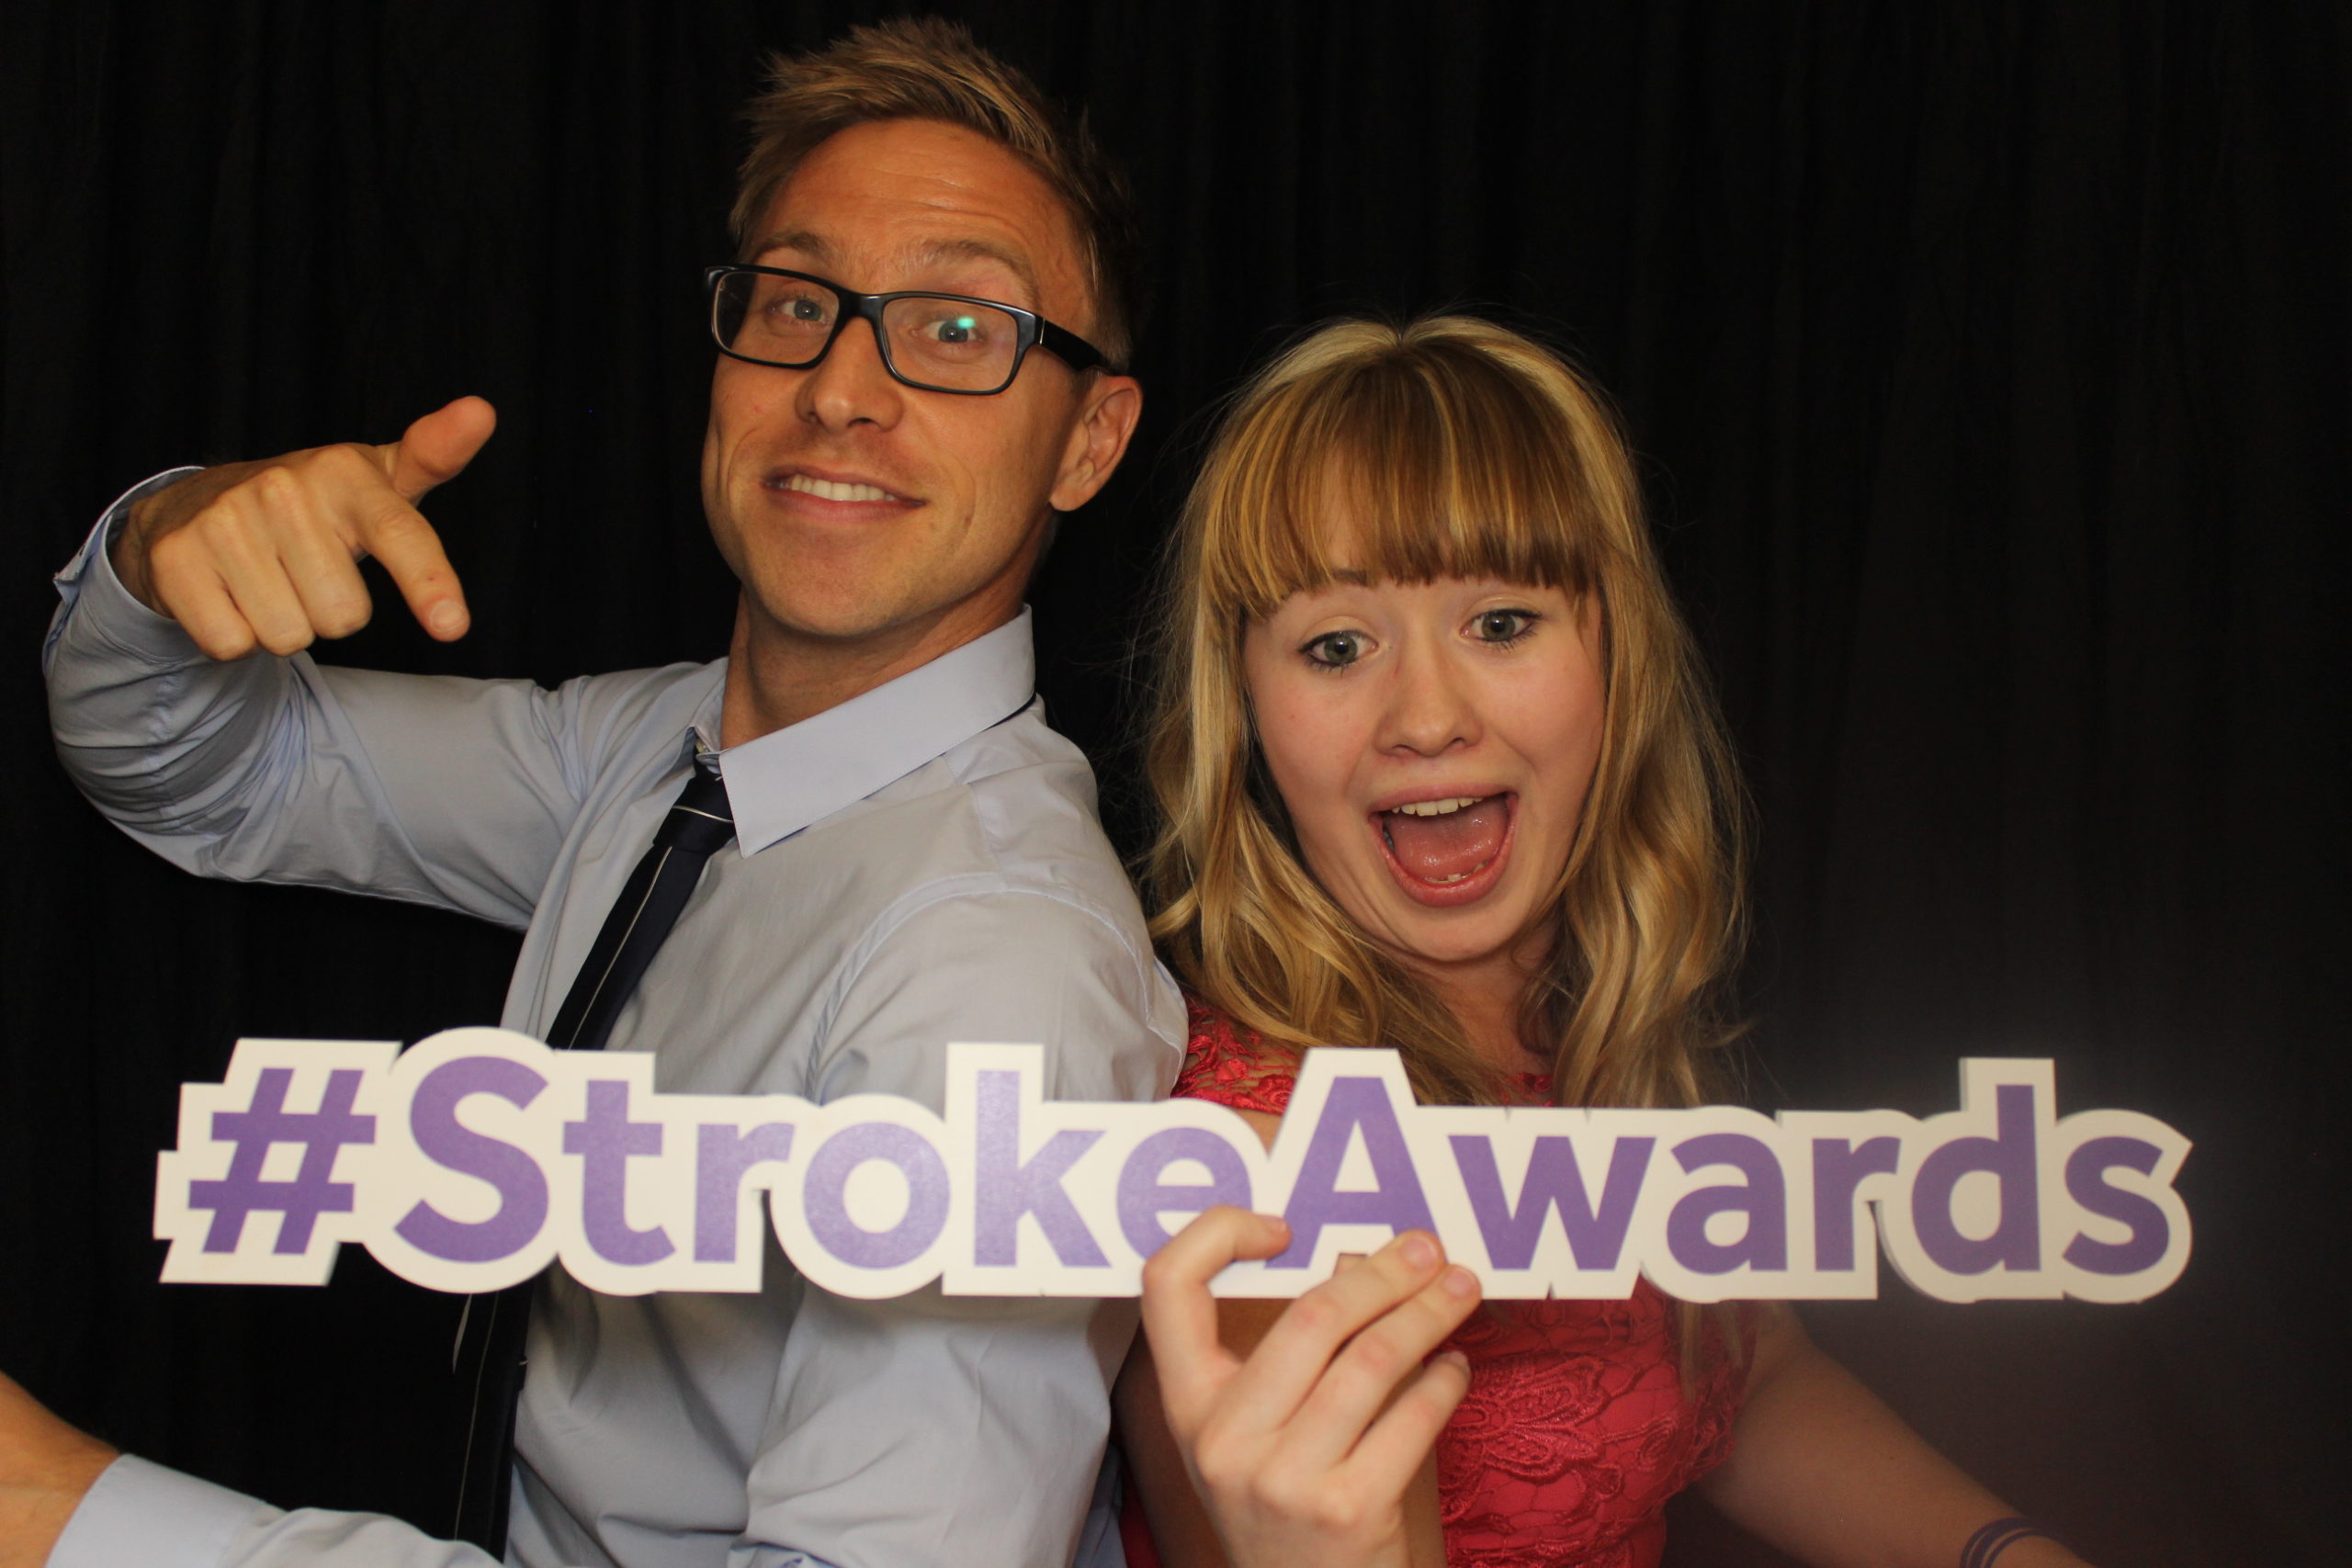 Stoke Awards Photo Booth